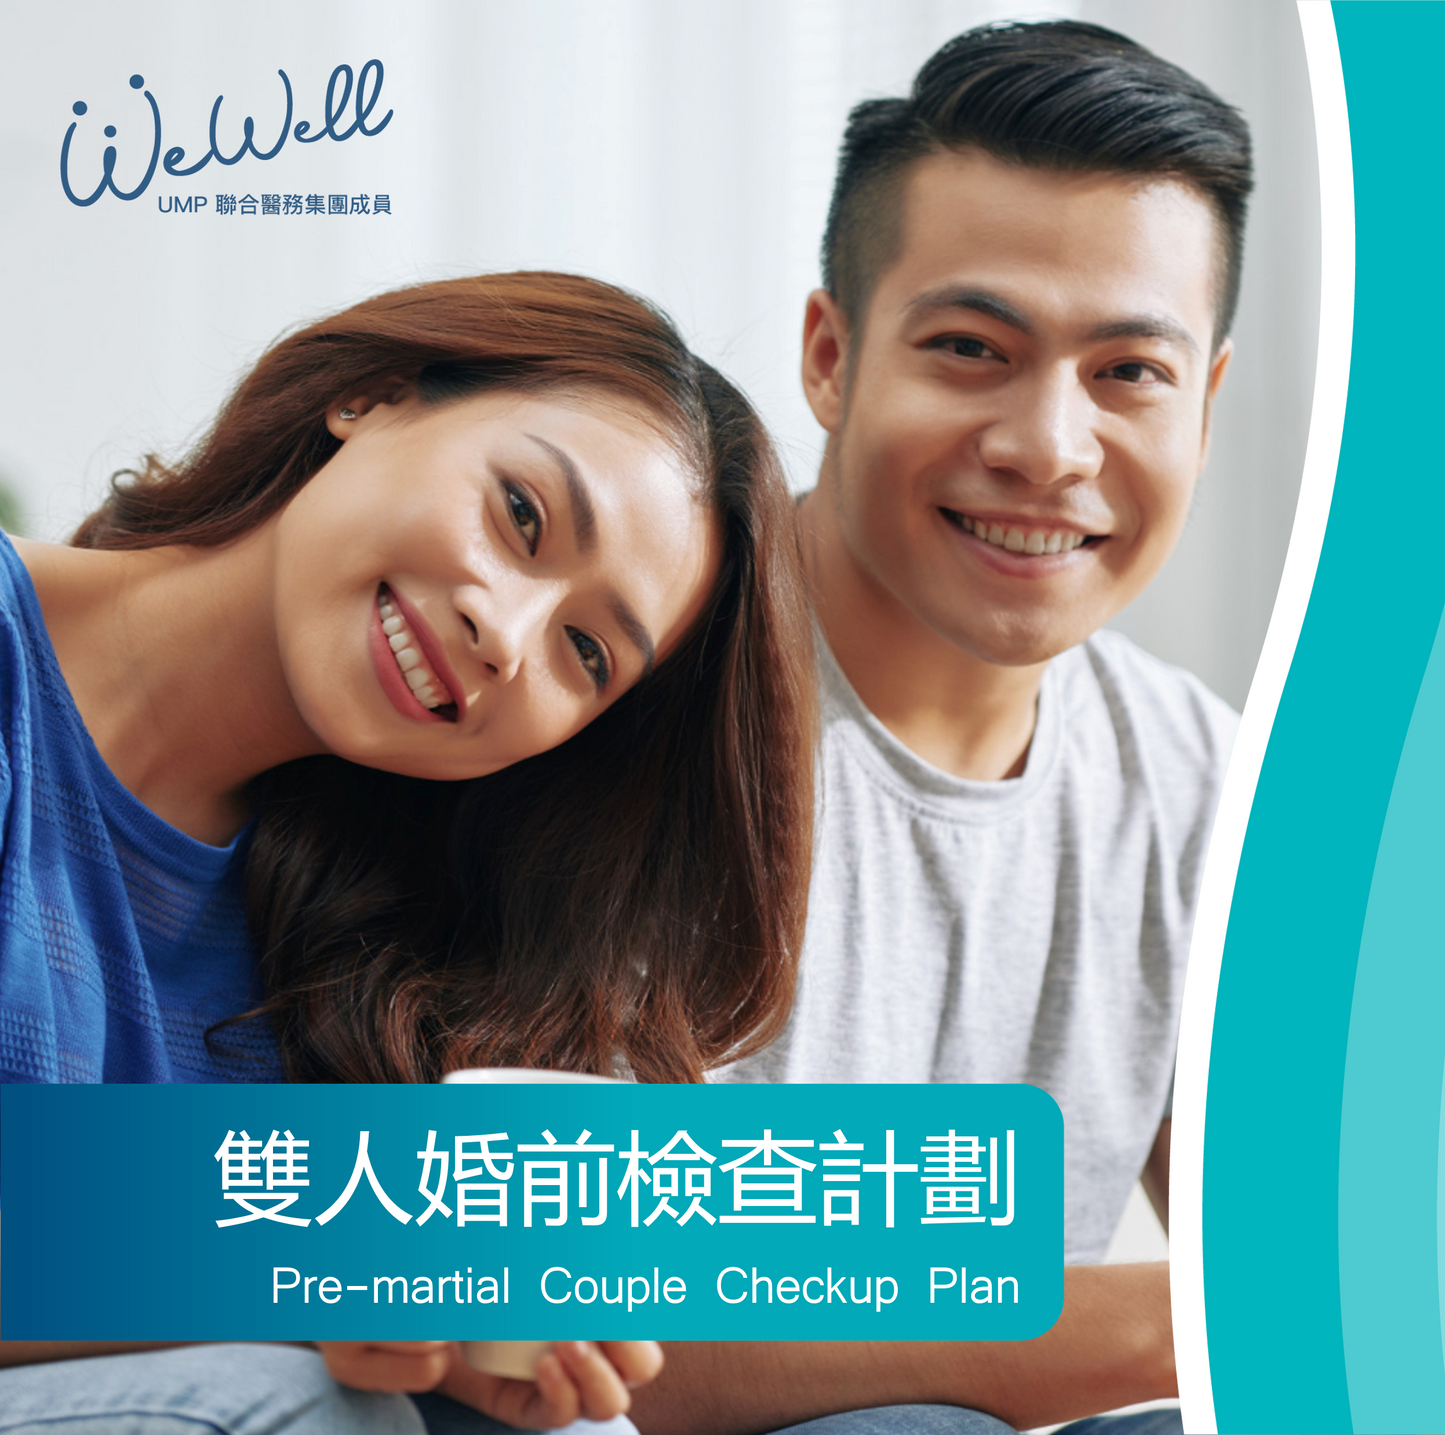 Pre-marital Couple Checkup Plan (SCH-ANN-05143)